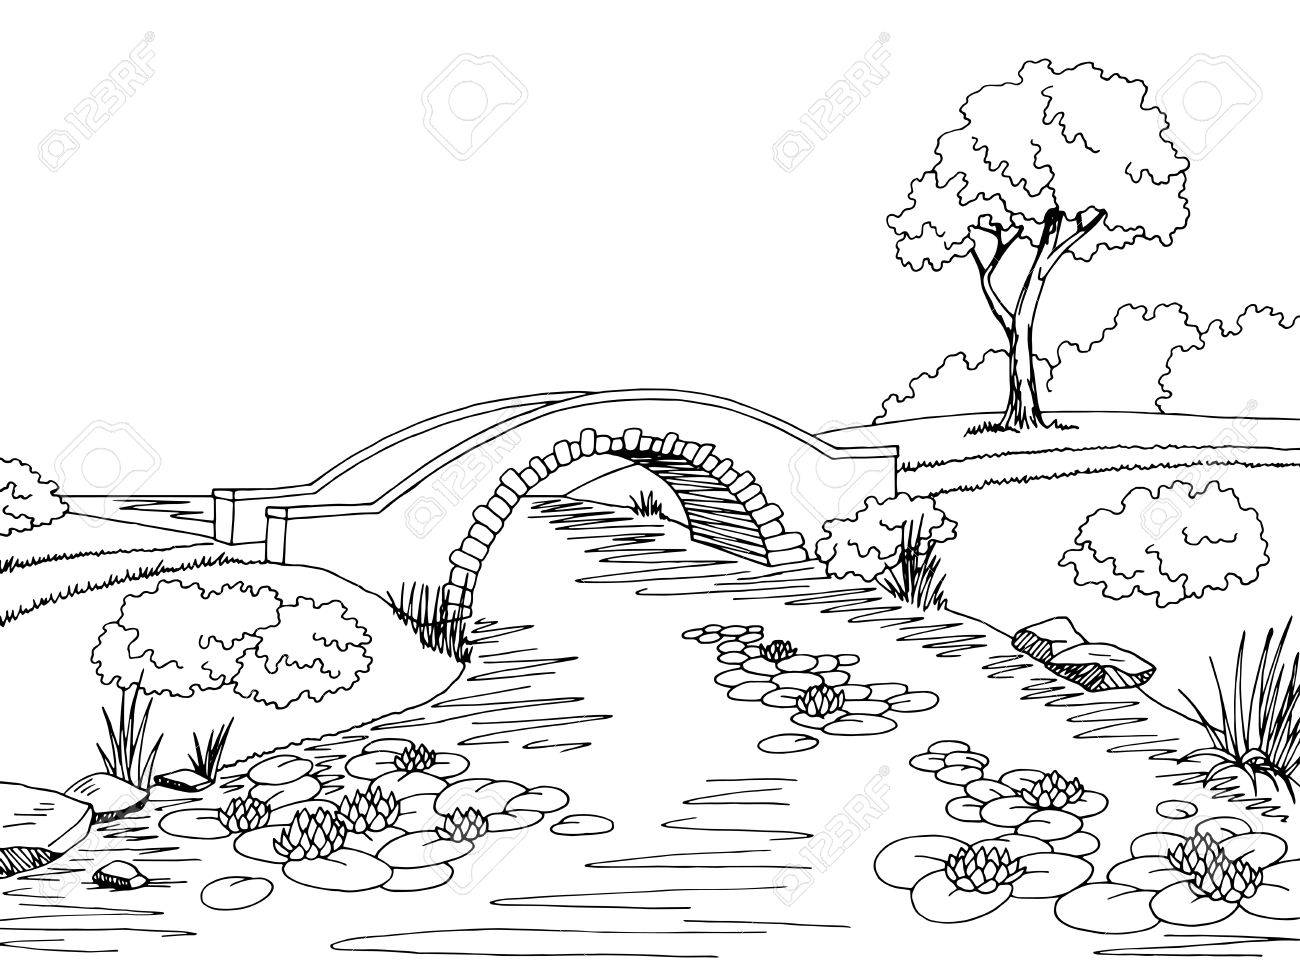 Bridge graphic black white landscape sketch illustration vector.